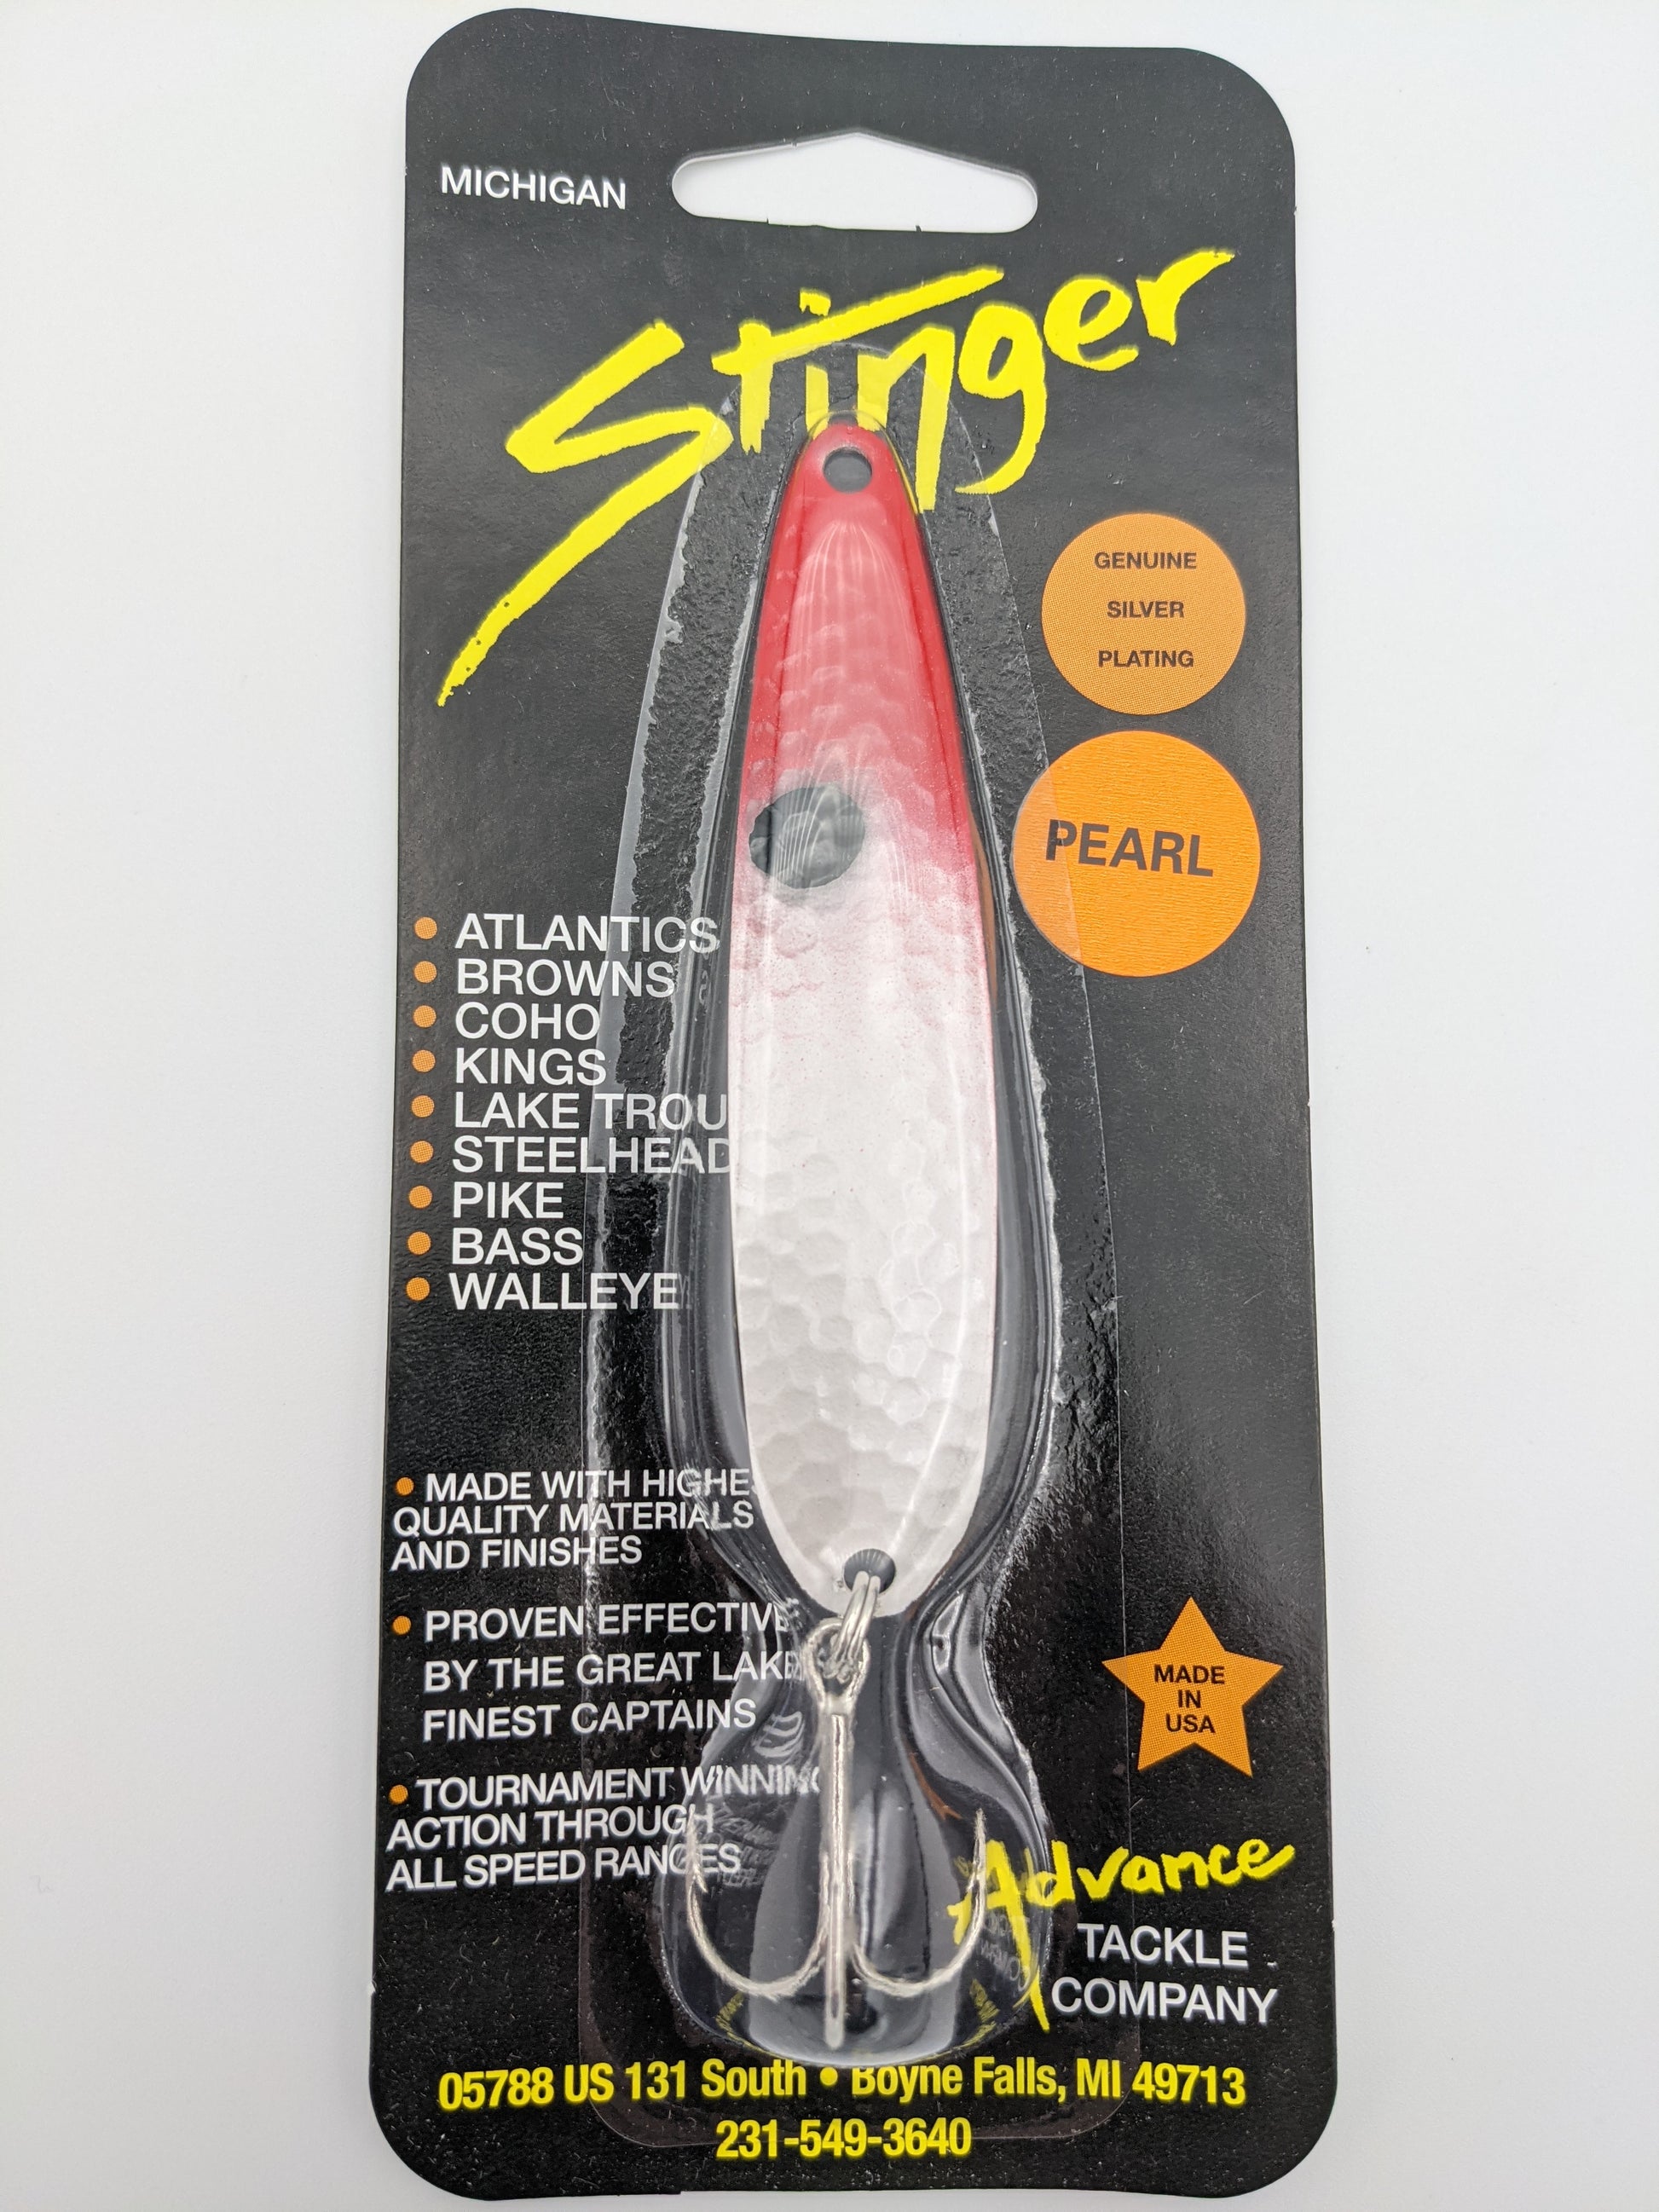 Michigan Stinger Standard 3.75 Spoon